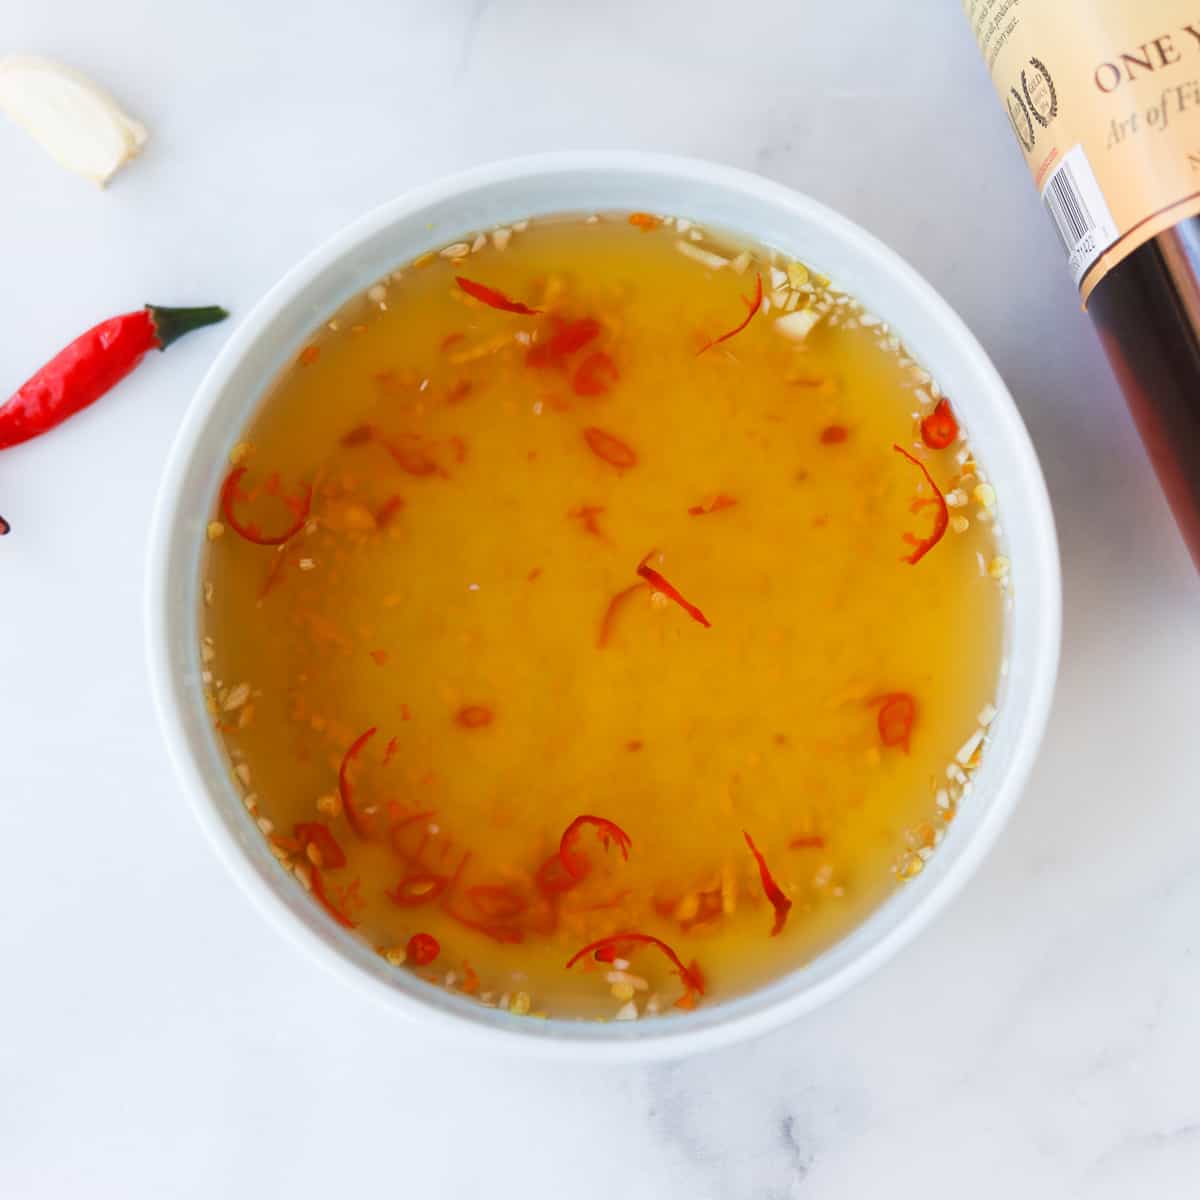 Nuoc Cham / Nuoc Mam (Vietnamese Fish Sauce Dipping Sauce